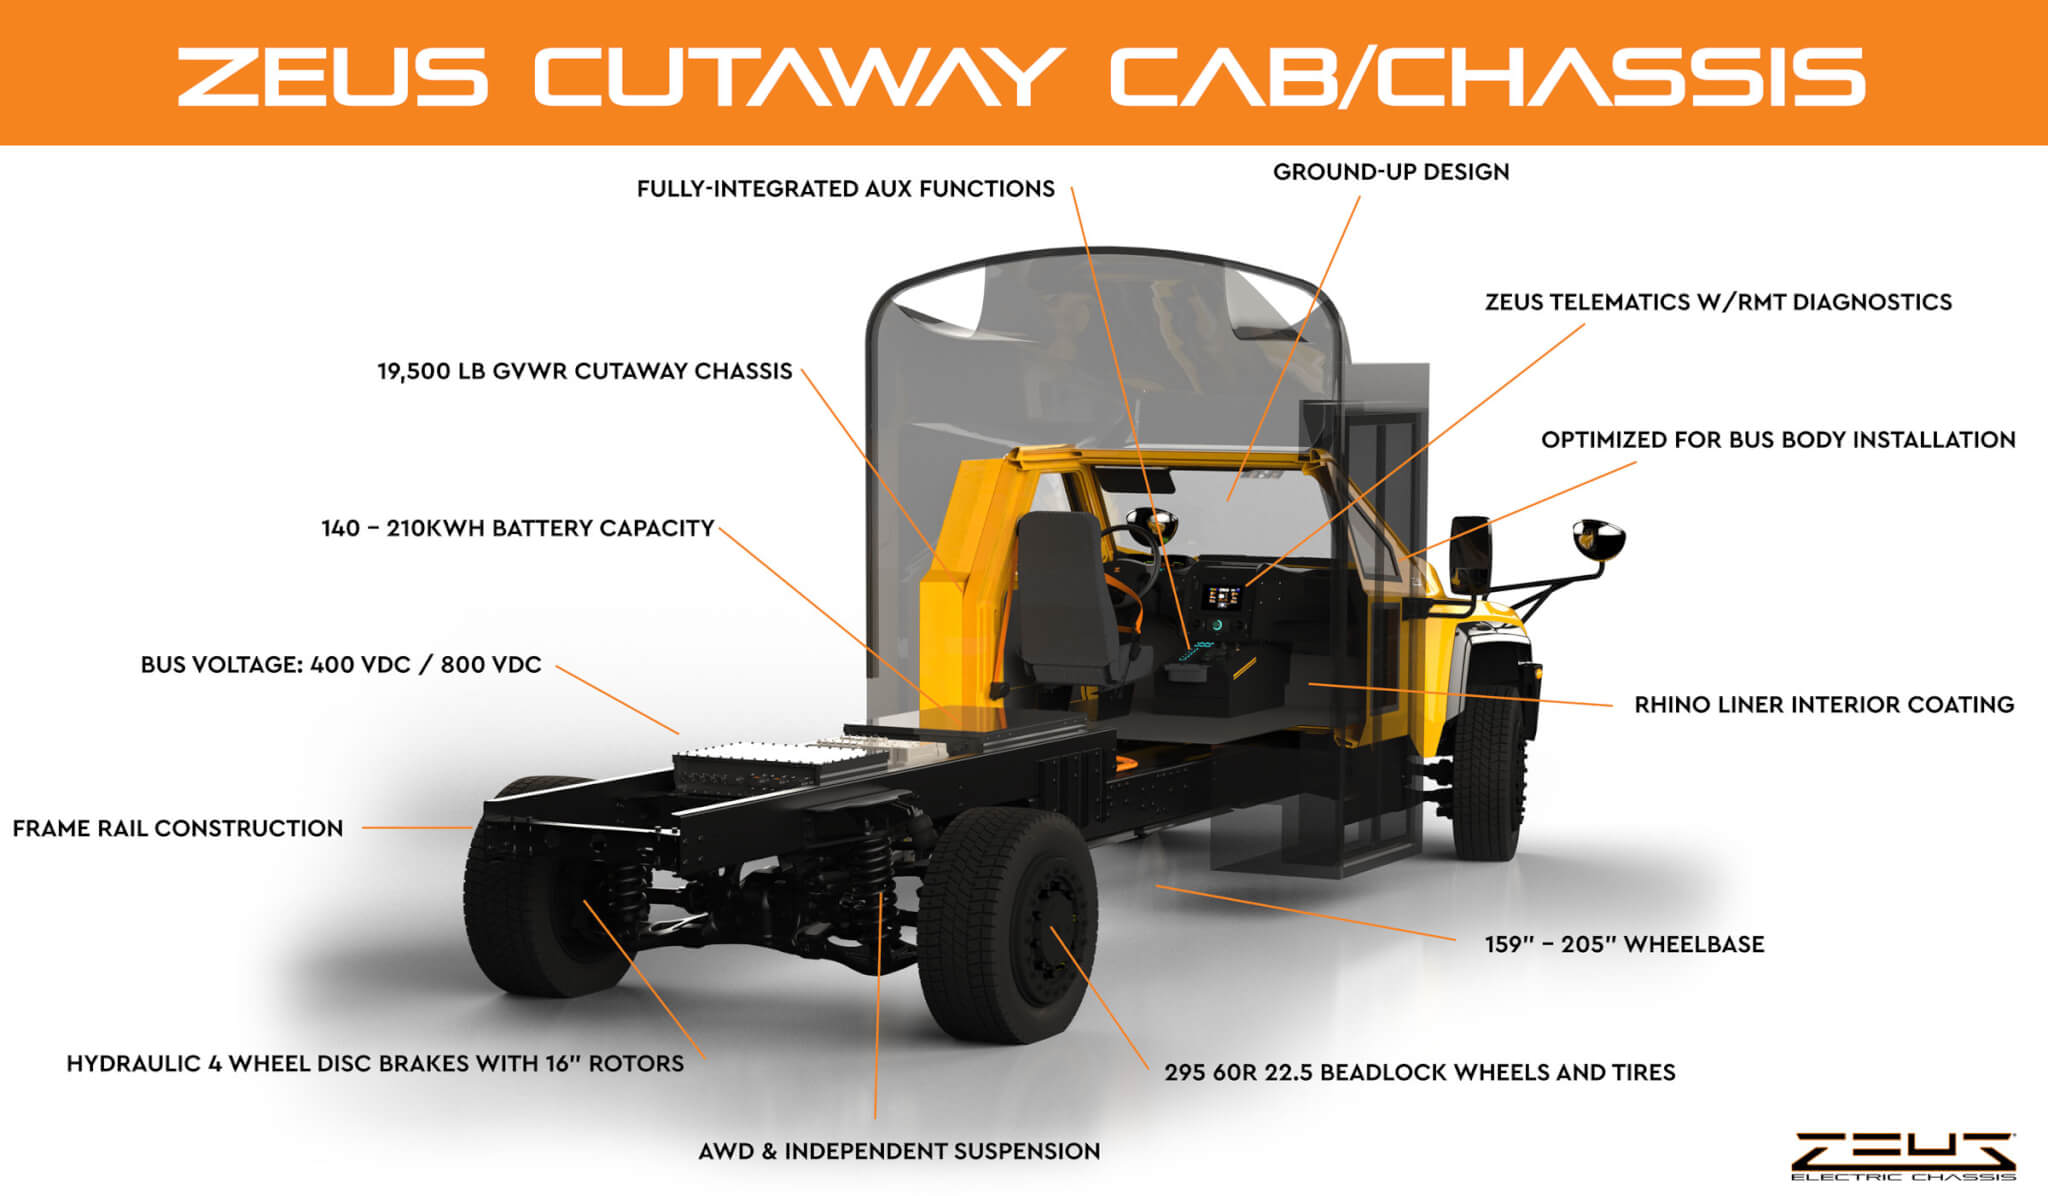 Zeus Cutaway Cab Chassis E-Transportation Solution